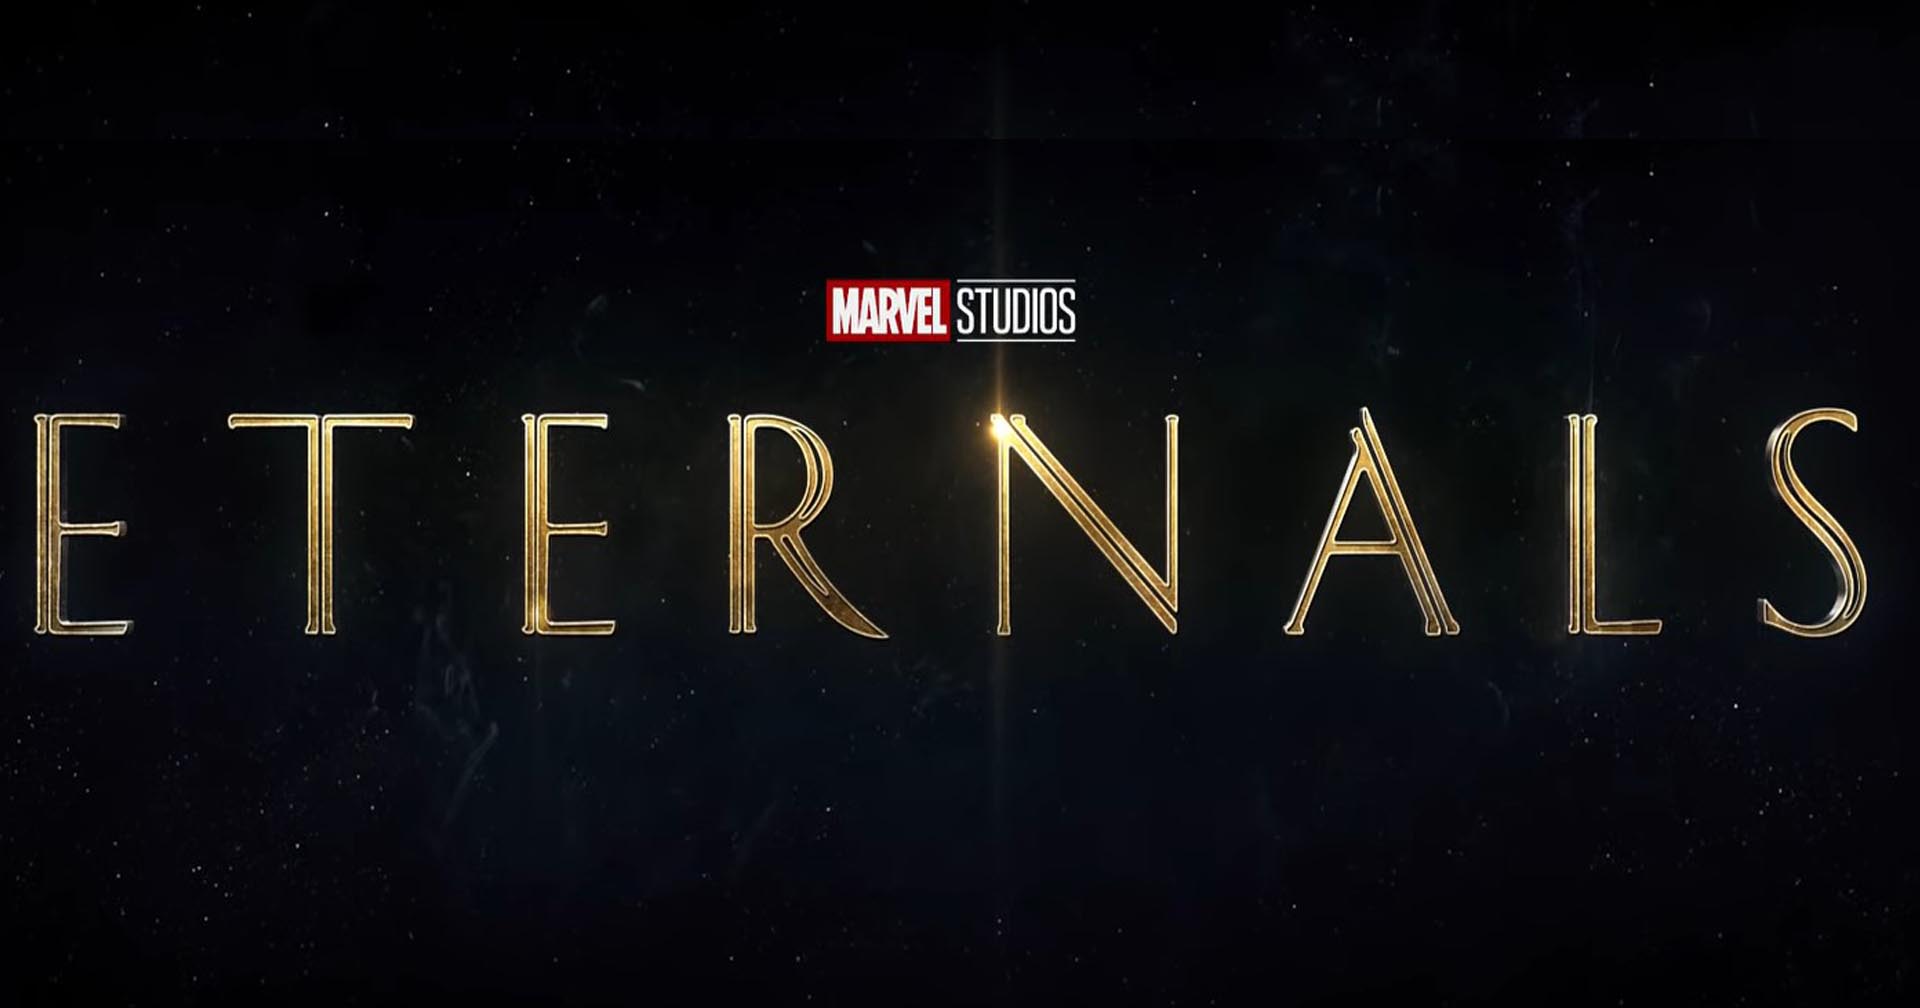 Marvel ปล่อย Final Trailer ของ Eternals ฮีโร่พลังเทพเจ้า